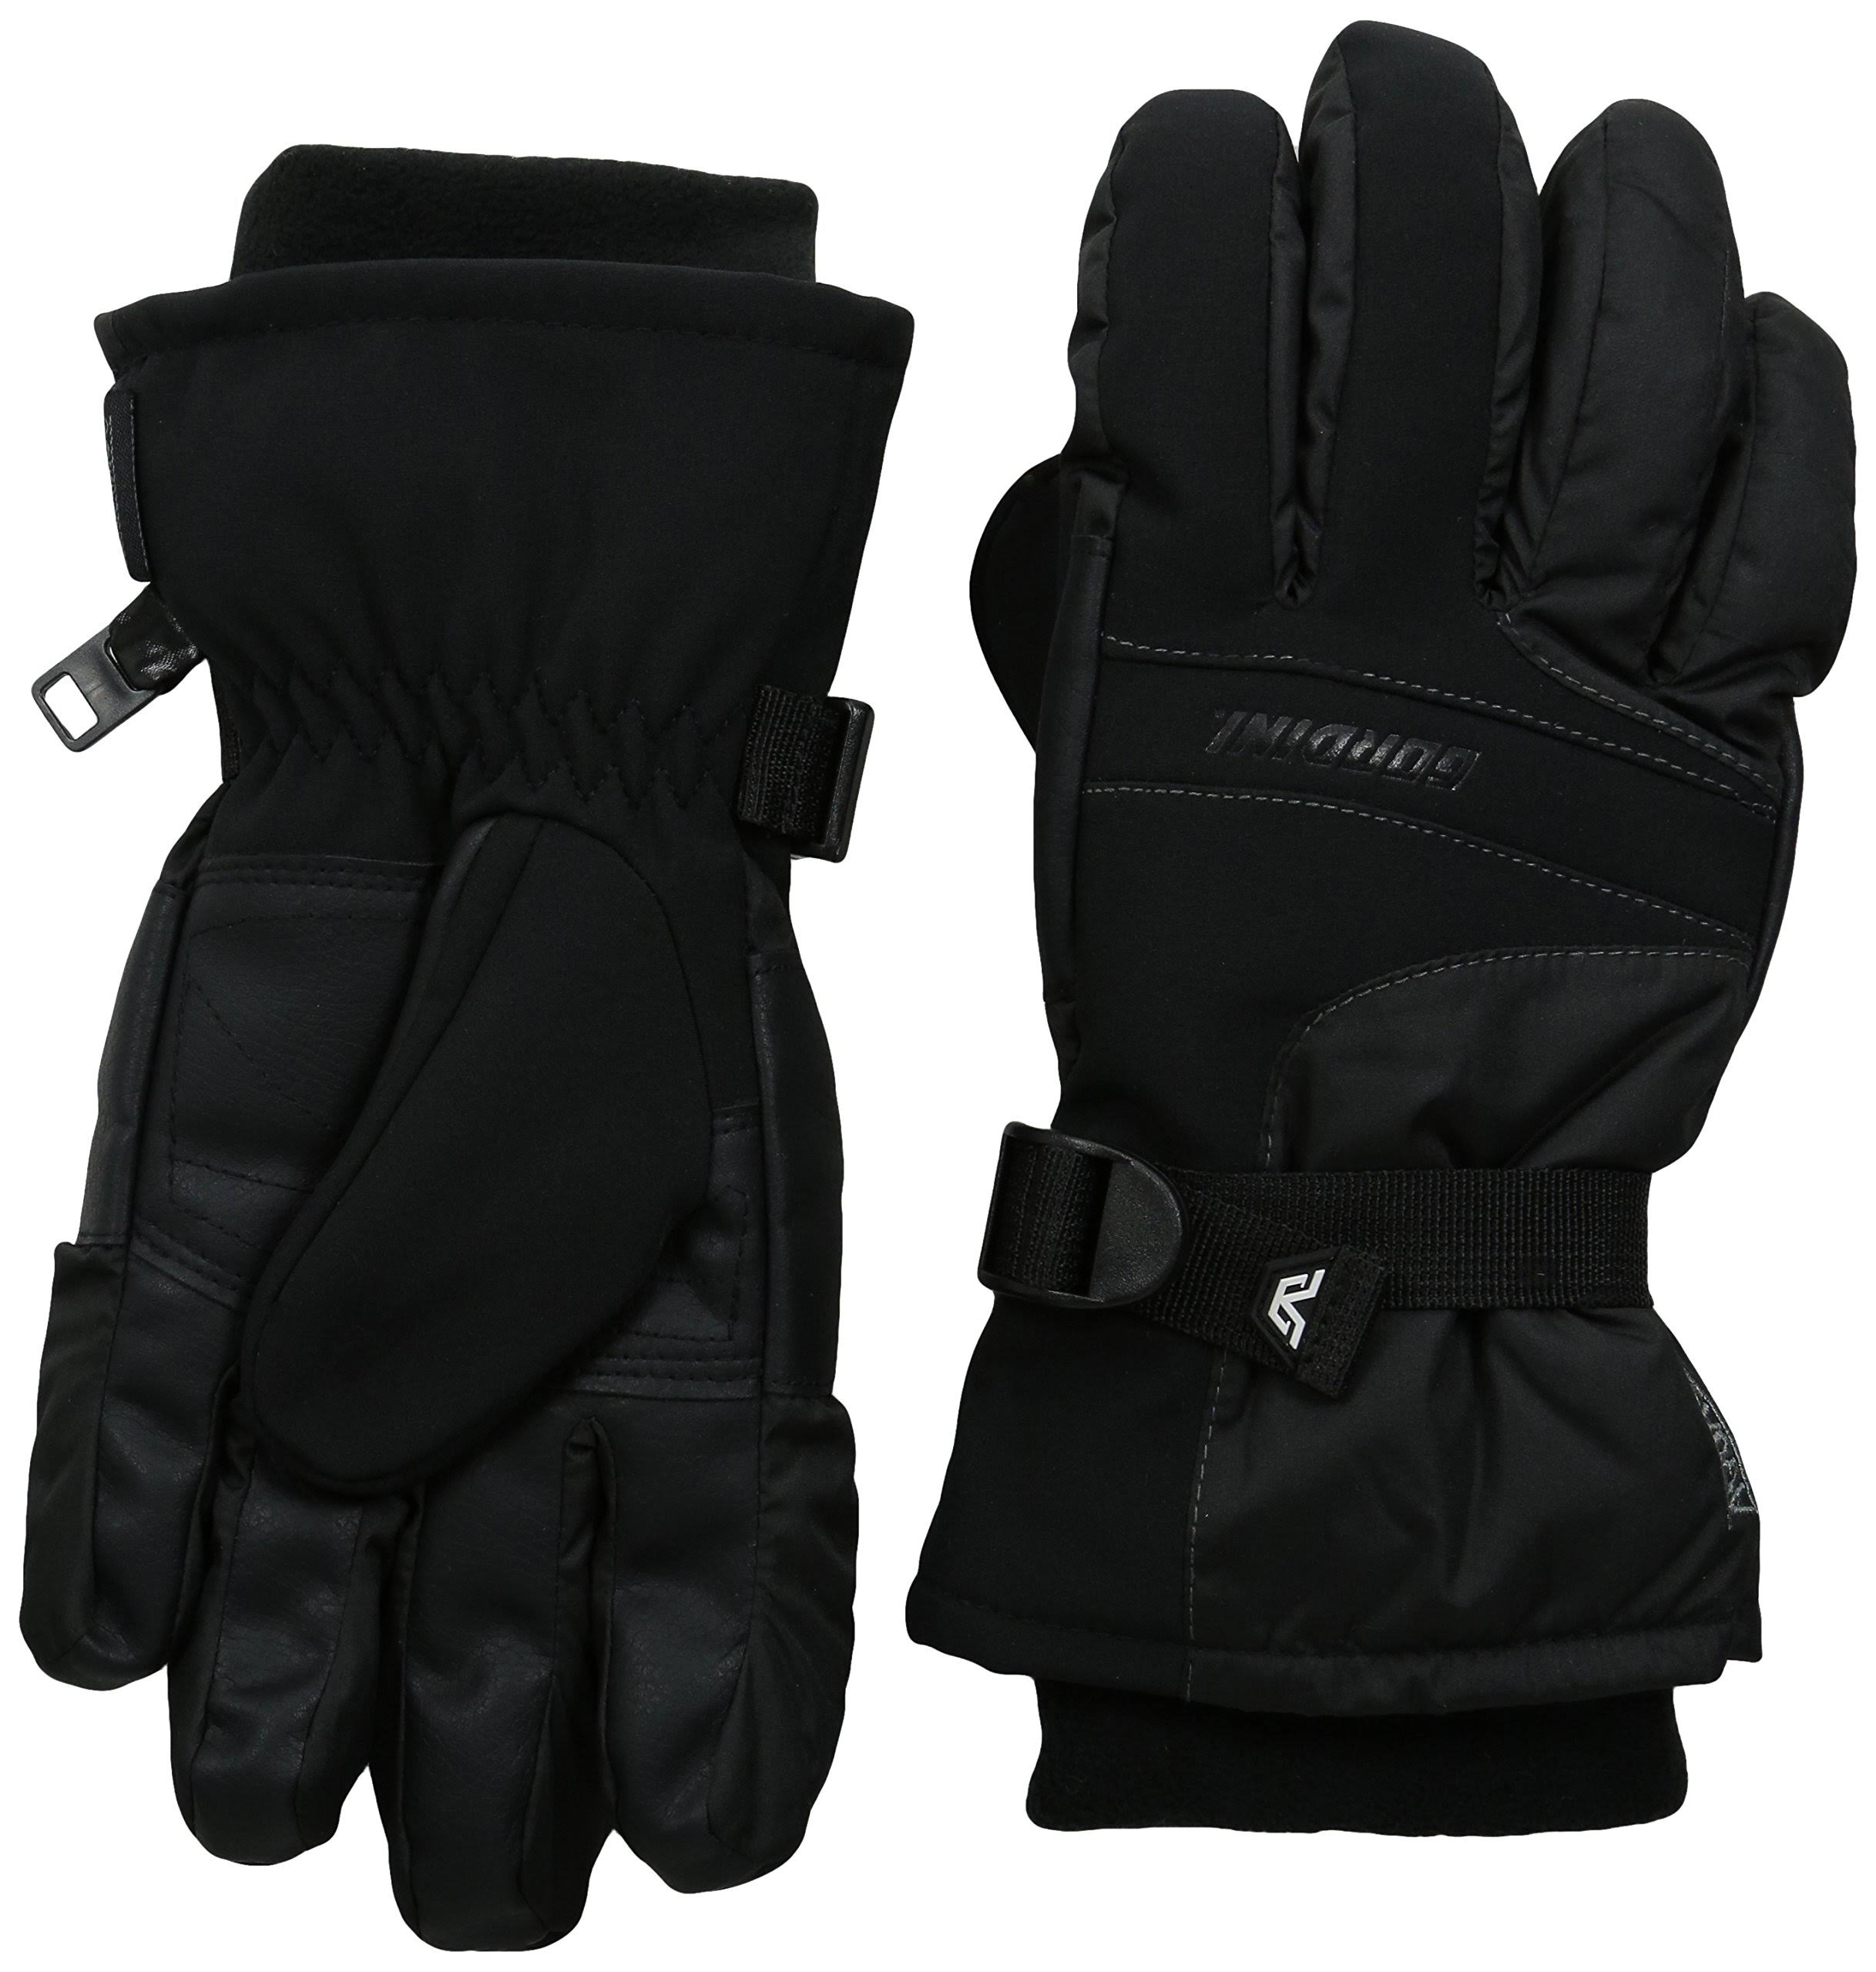 Gordini Women's Aquabloc VIII Gloves - Black, Small